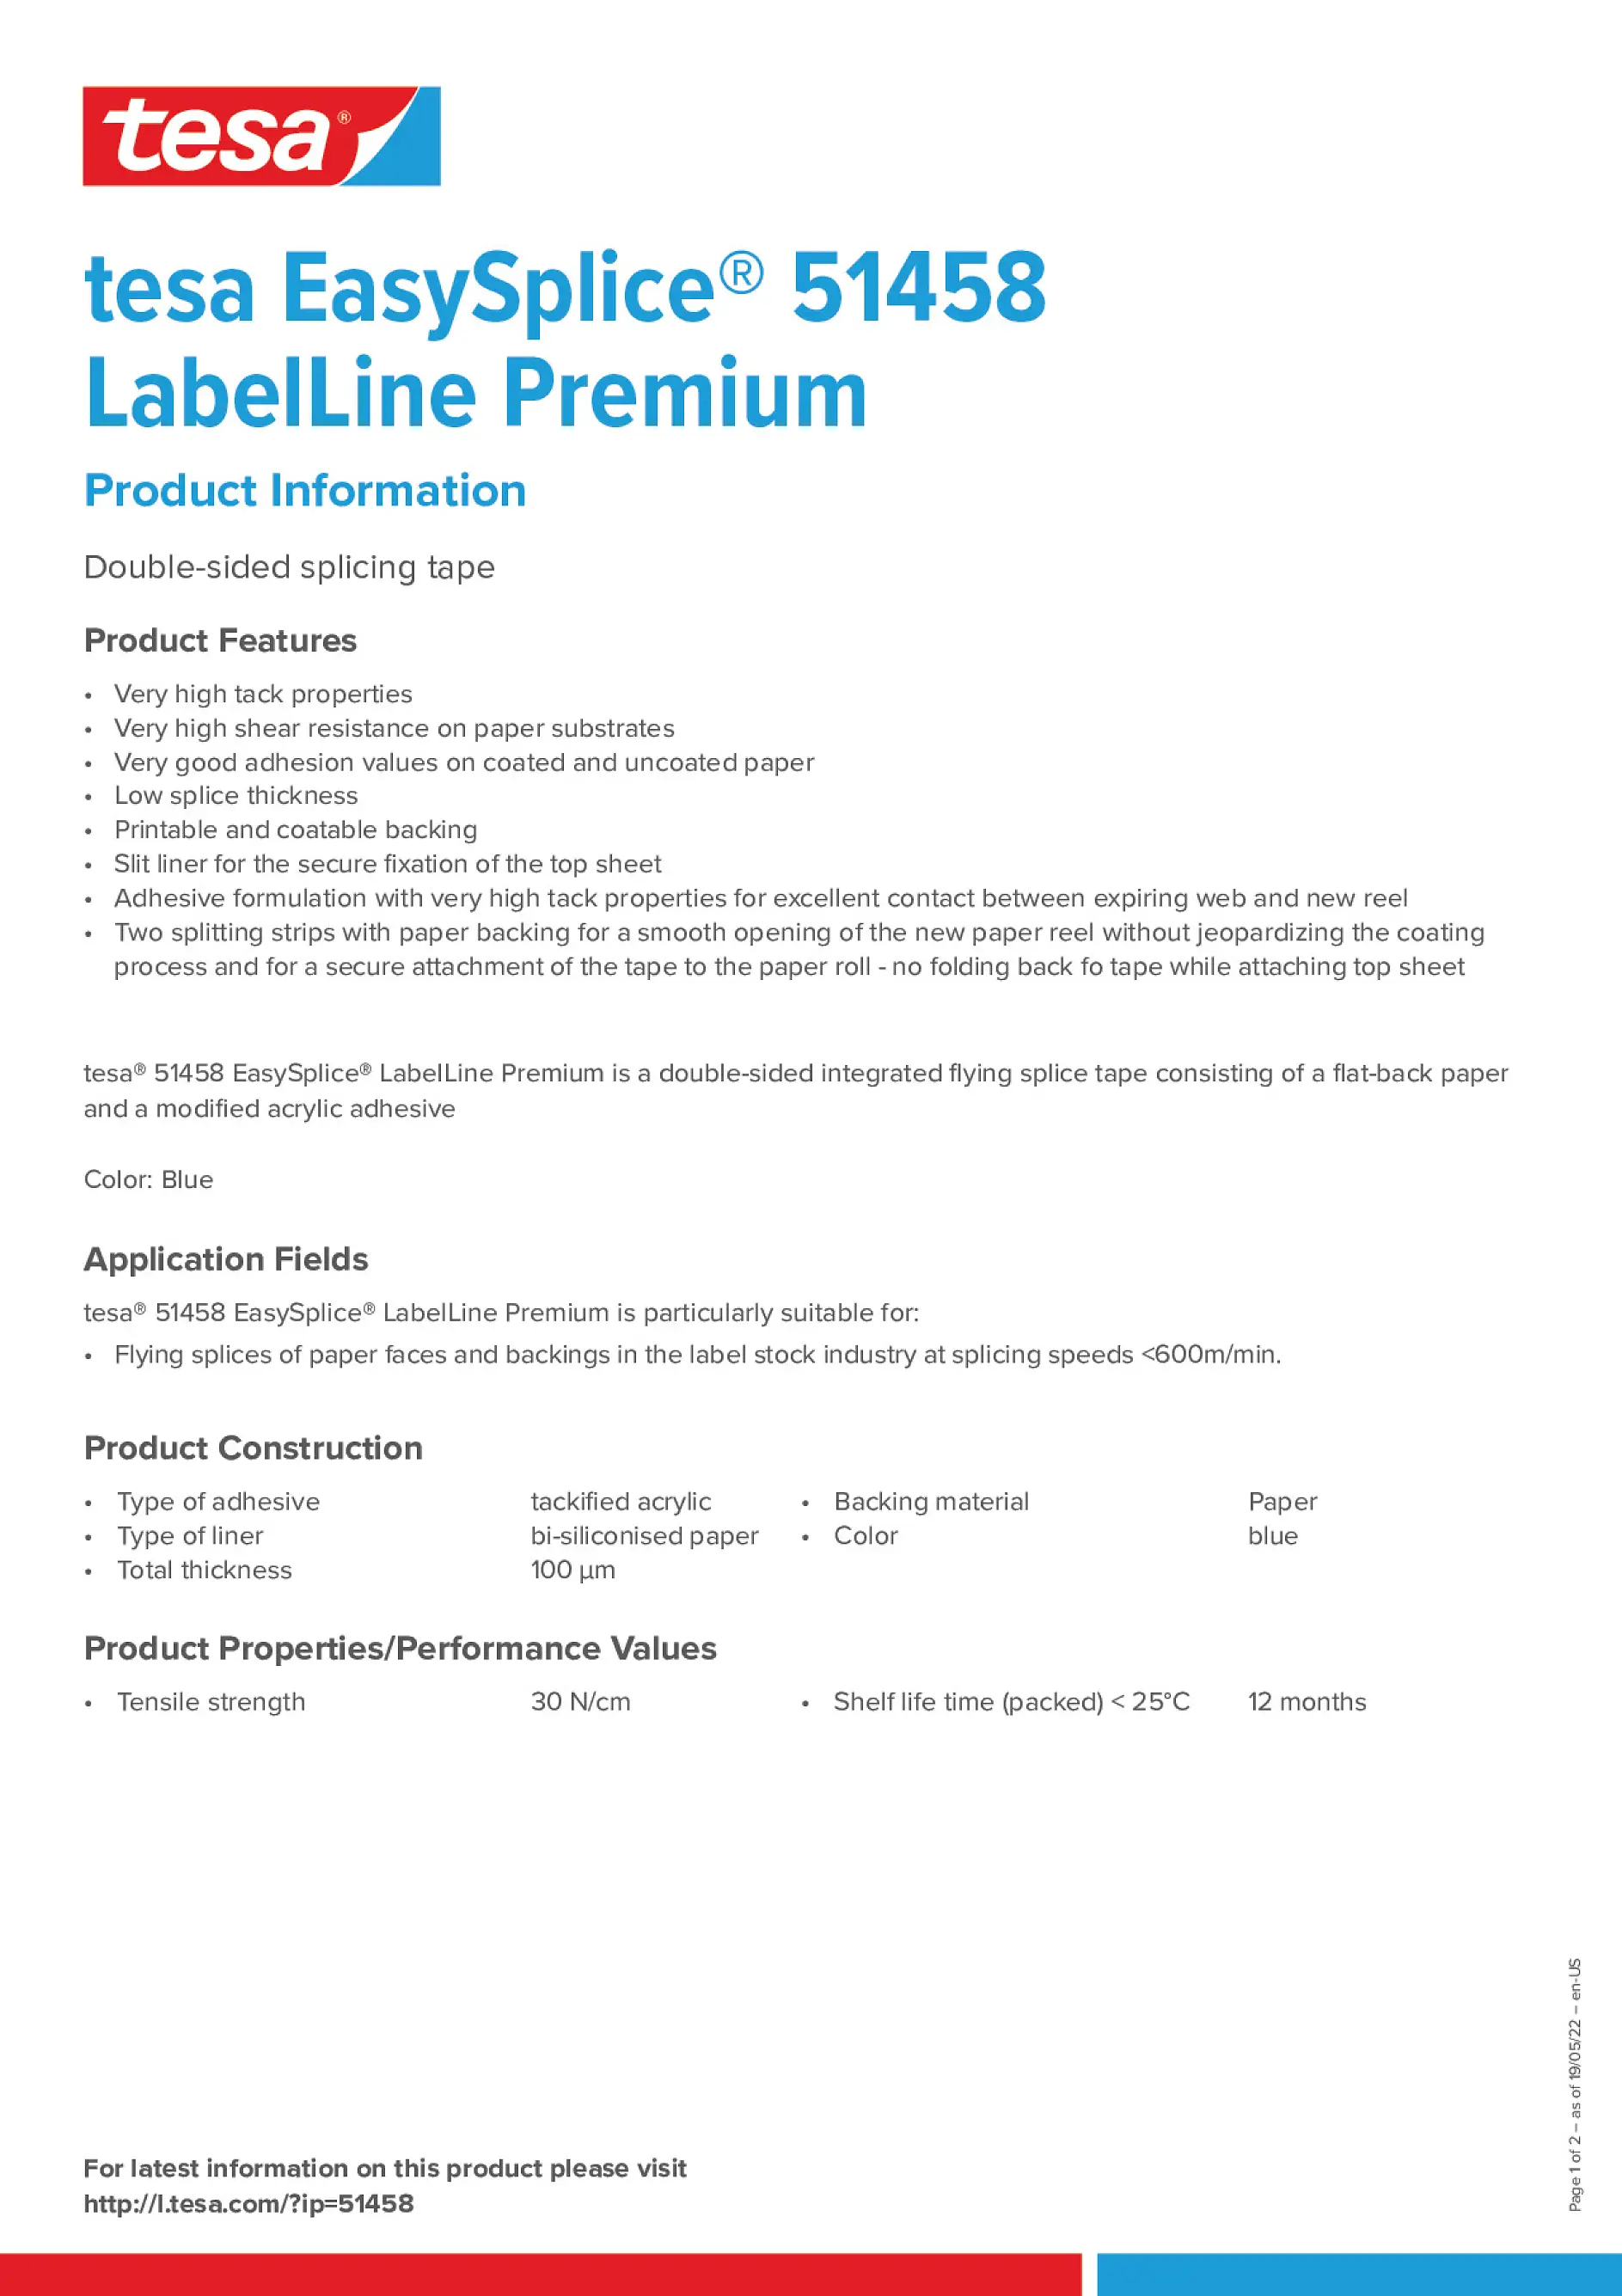 tesa_EasySplice_51458_LabelLine_Premium_en-US